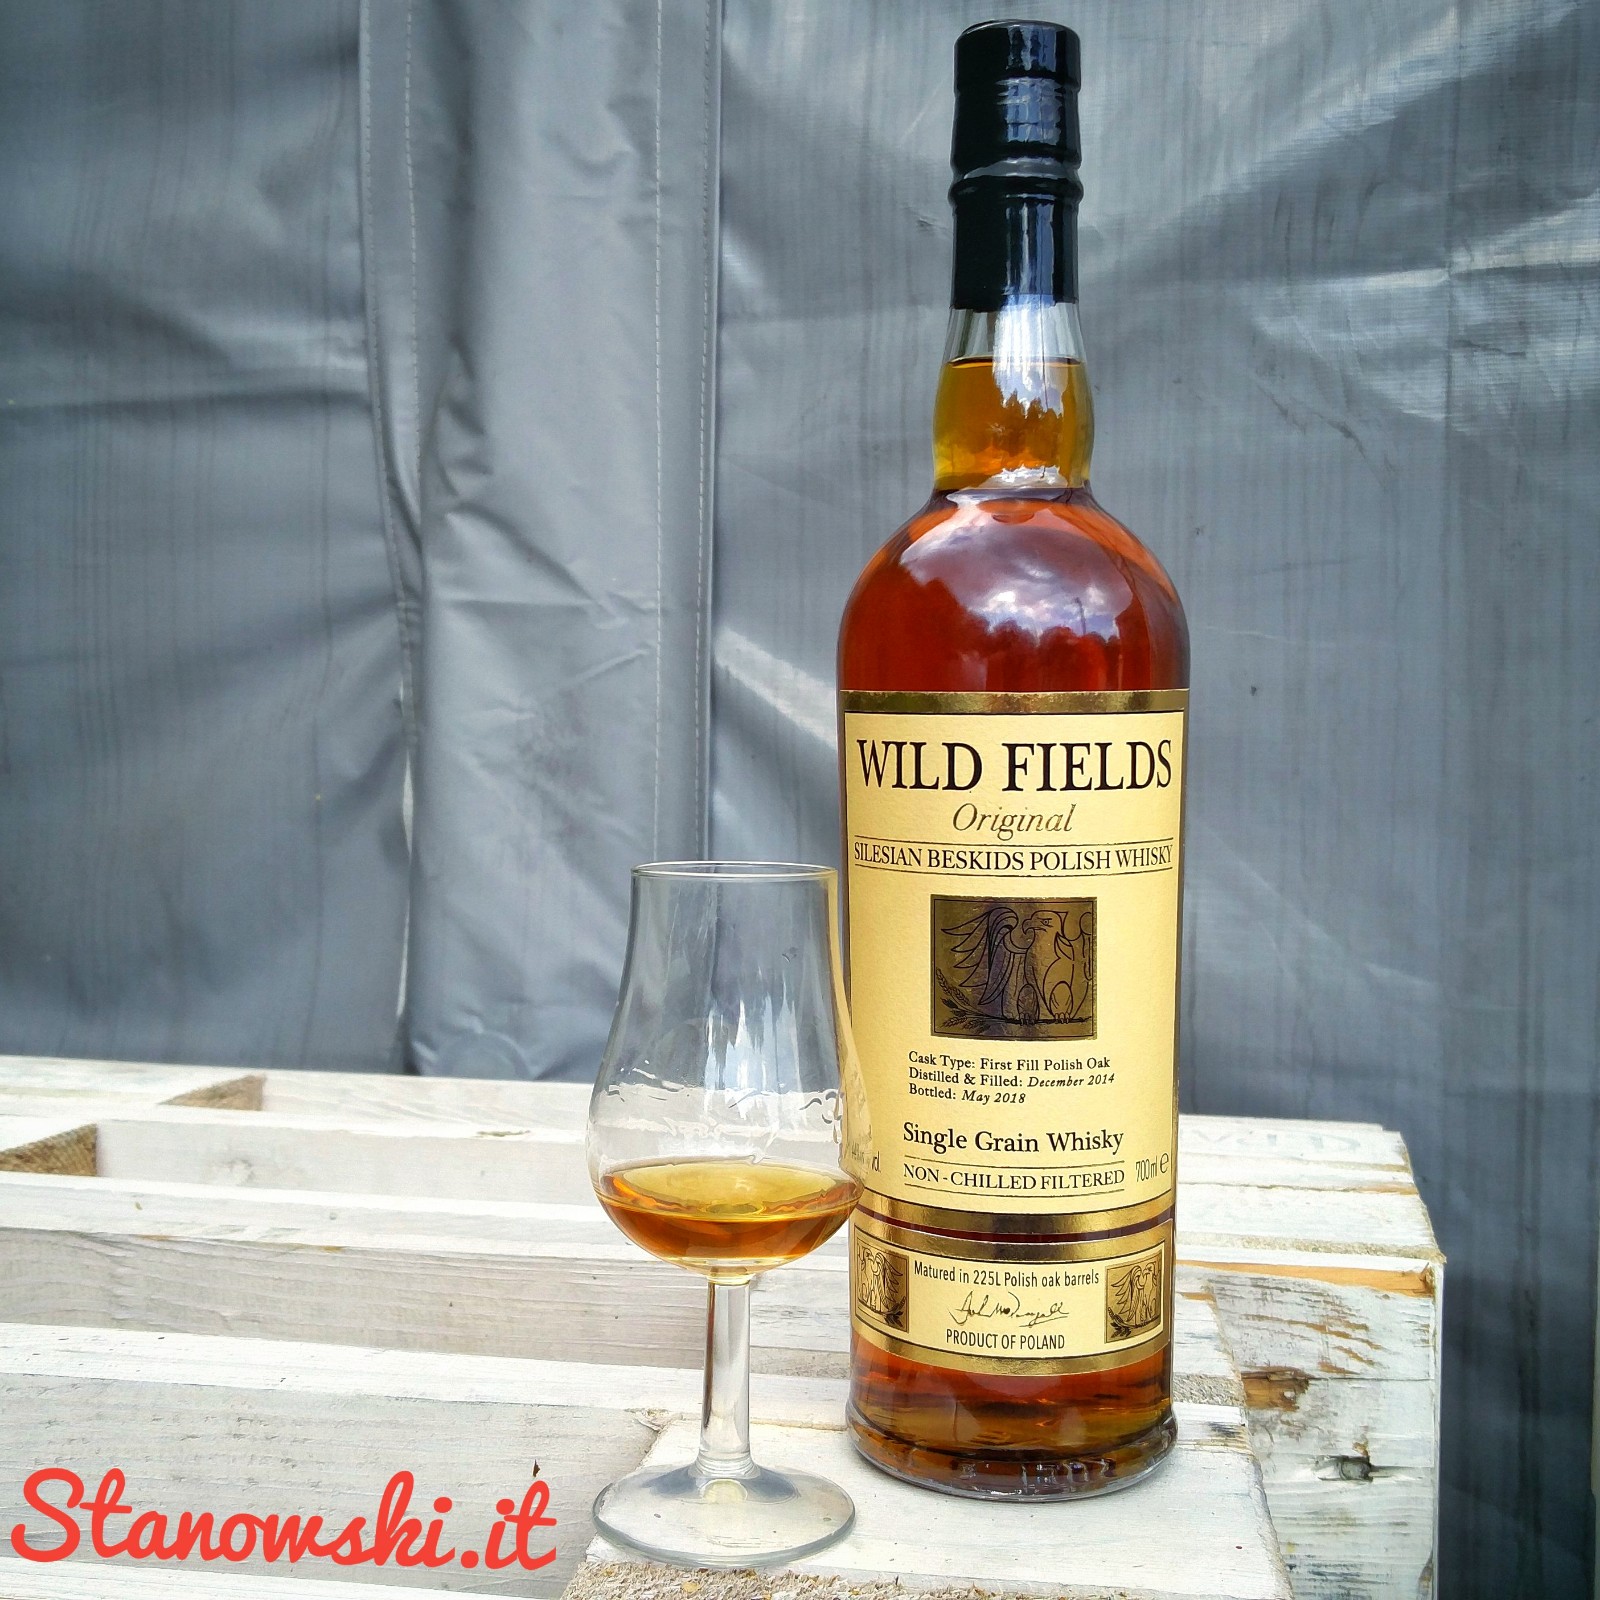 Wild Fields Original Single Grain Polish Whisky